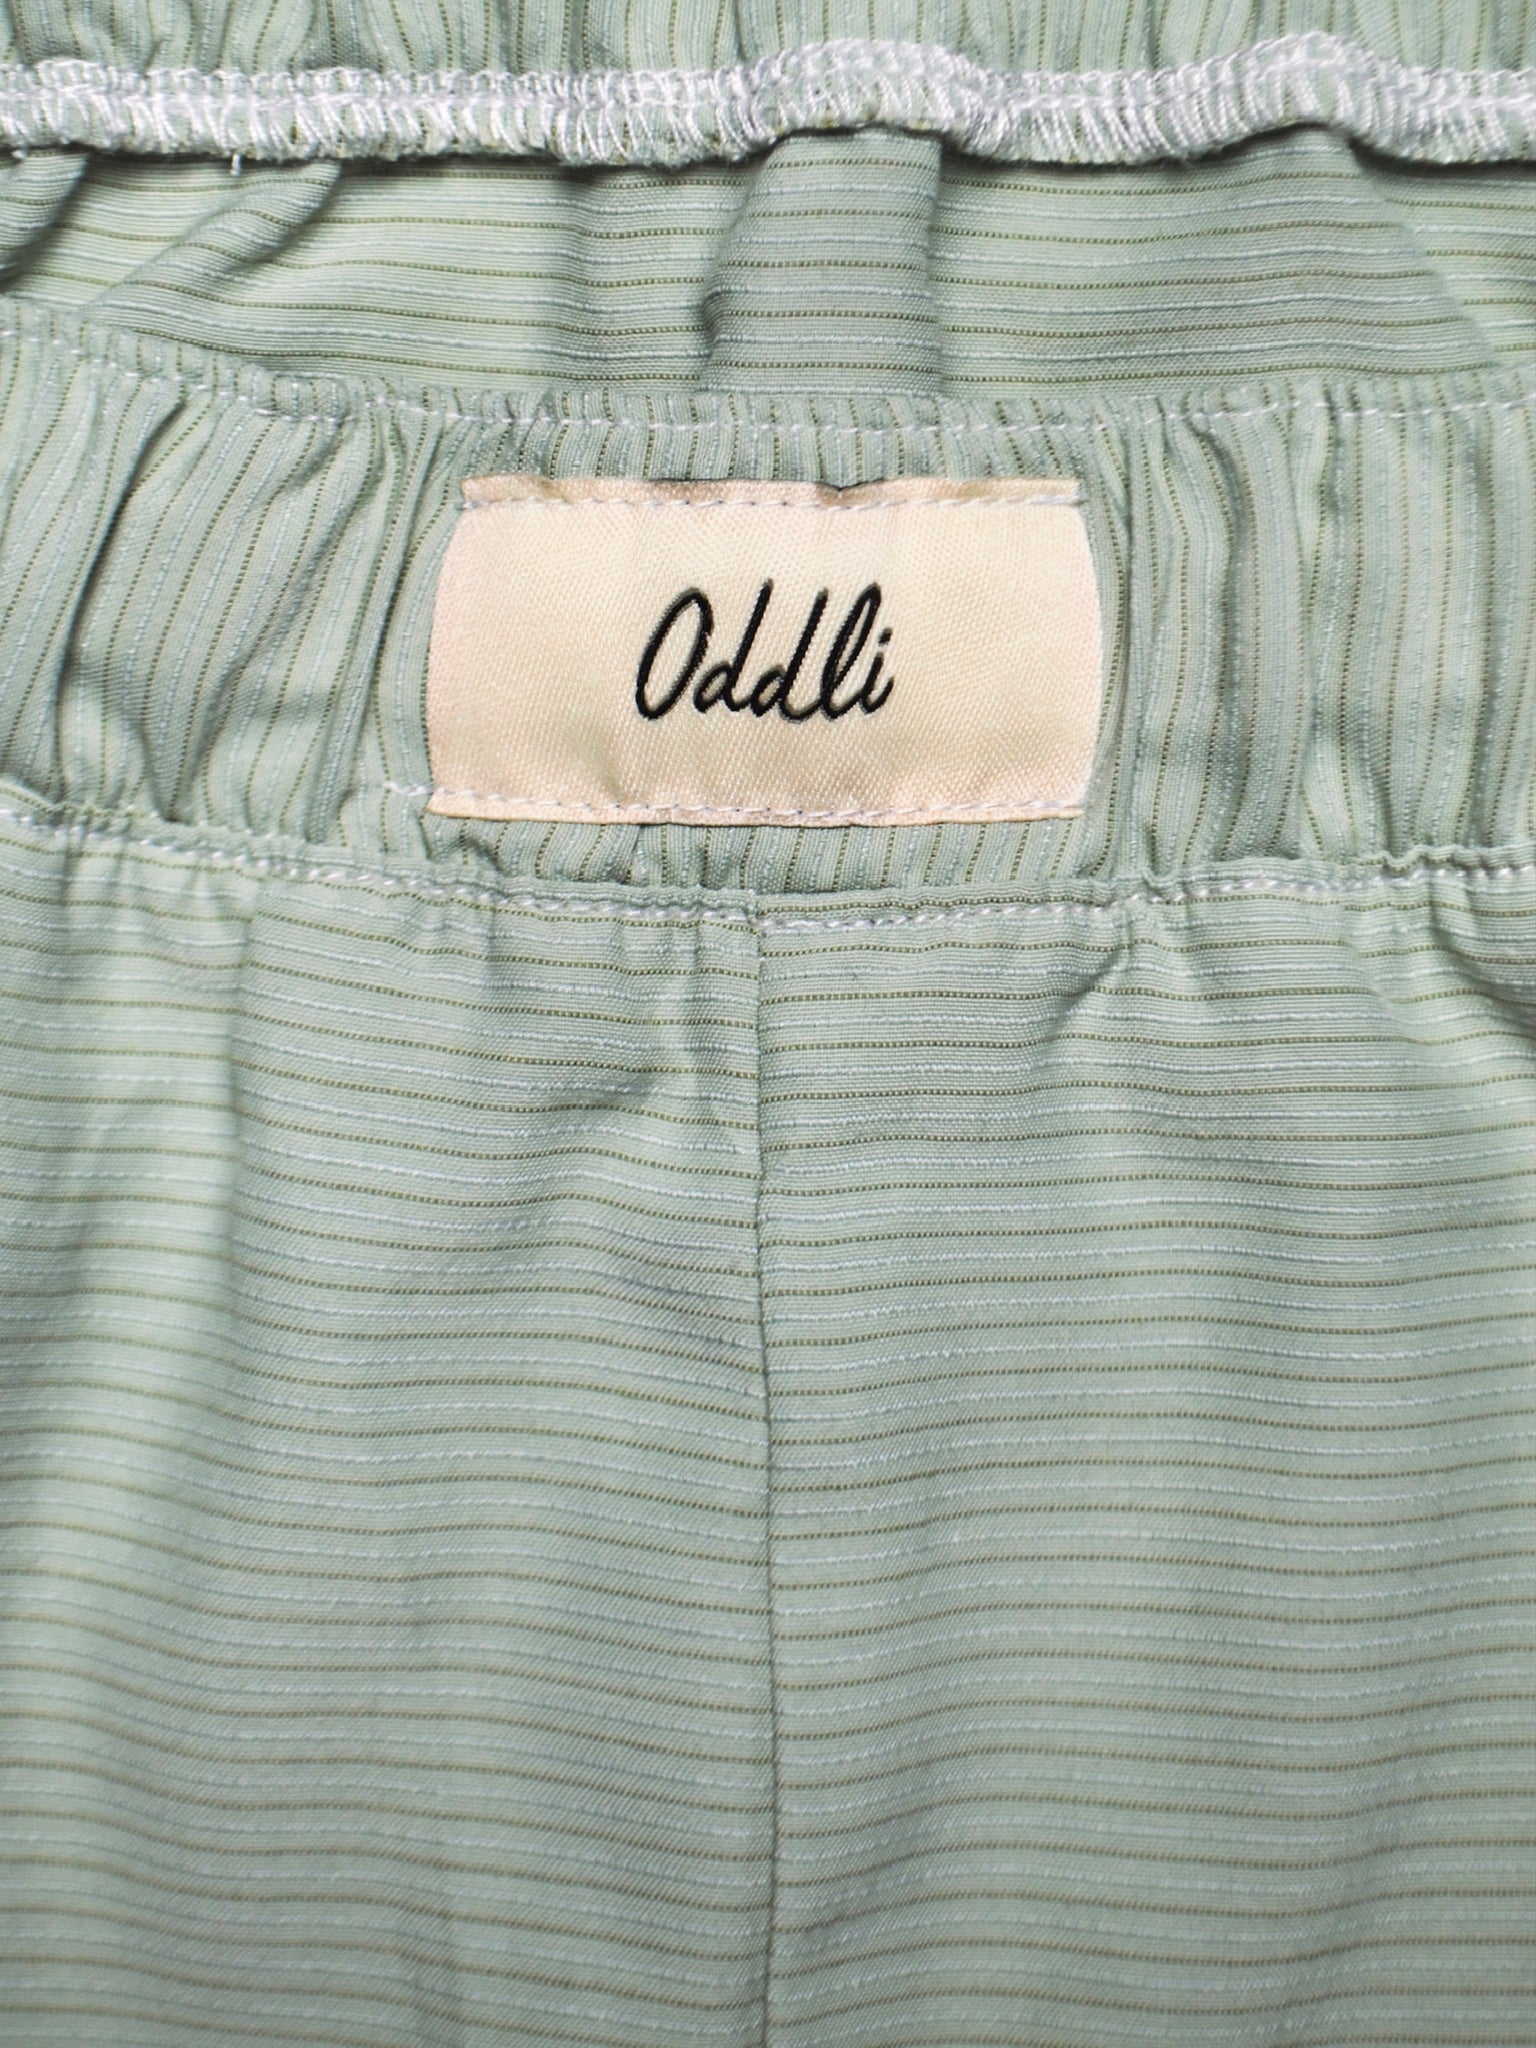 Boxer Mini Skirt – ODDLI INC.